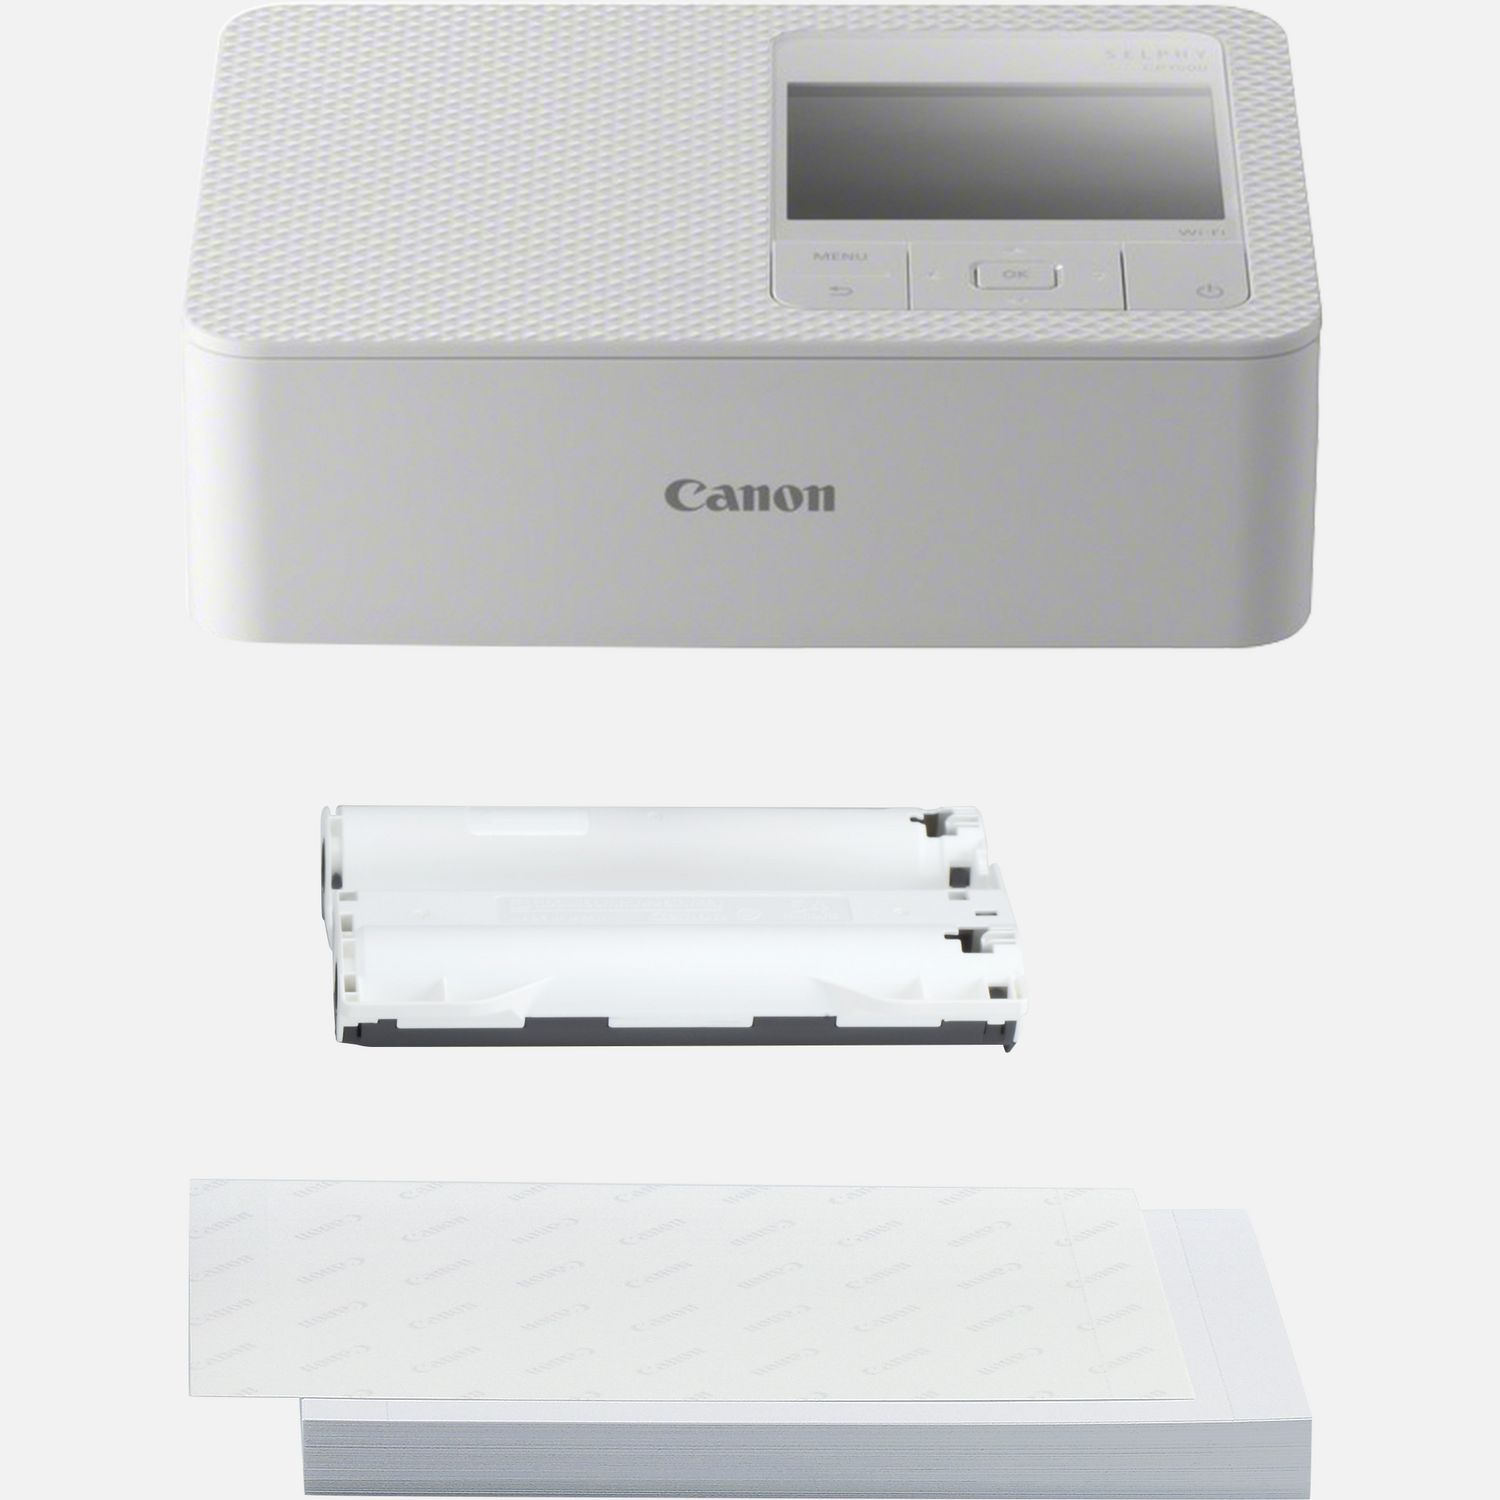 Kit imprimante photo portable Canon SELPHY CP1500, blanche + 54 feuilles de papier photo